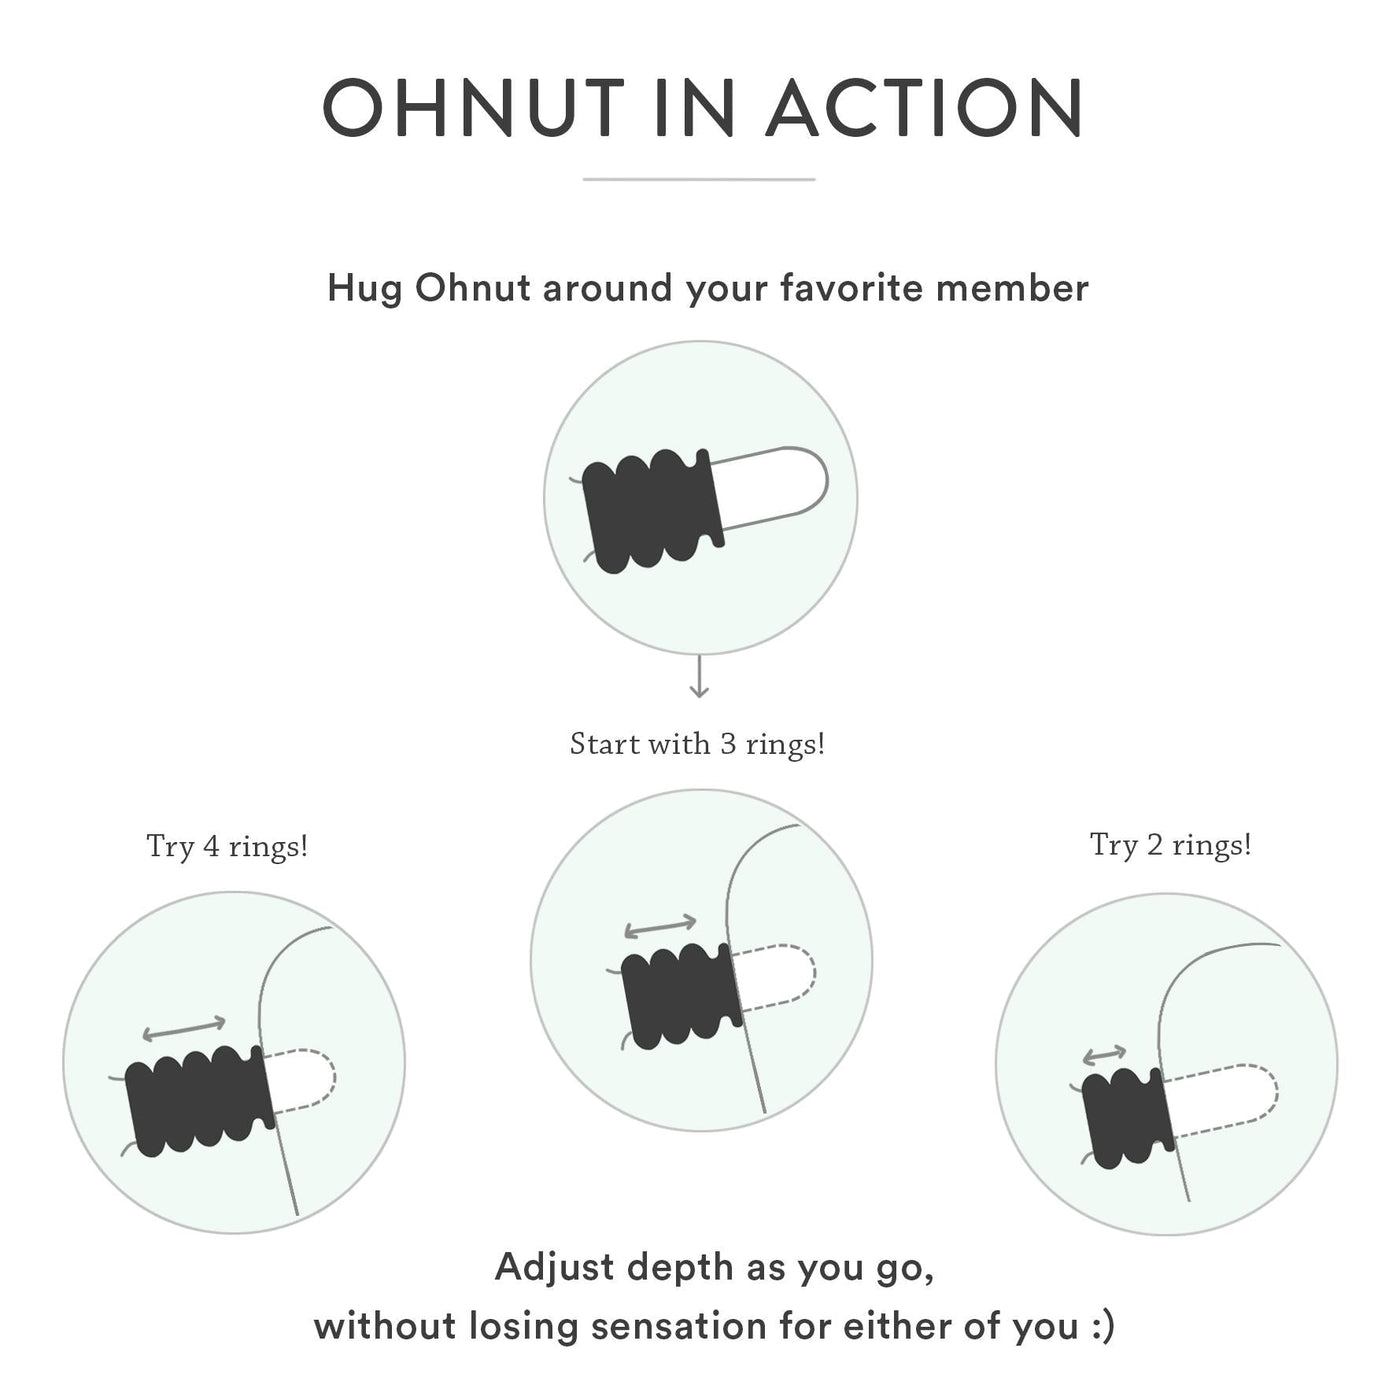 OHNUT | Customize Penetration Depth